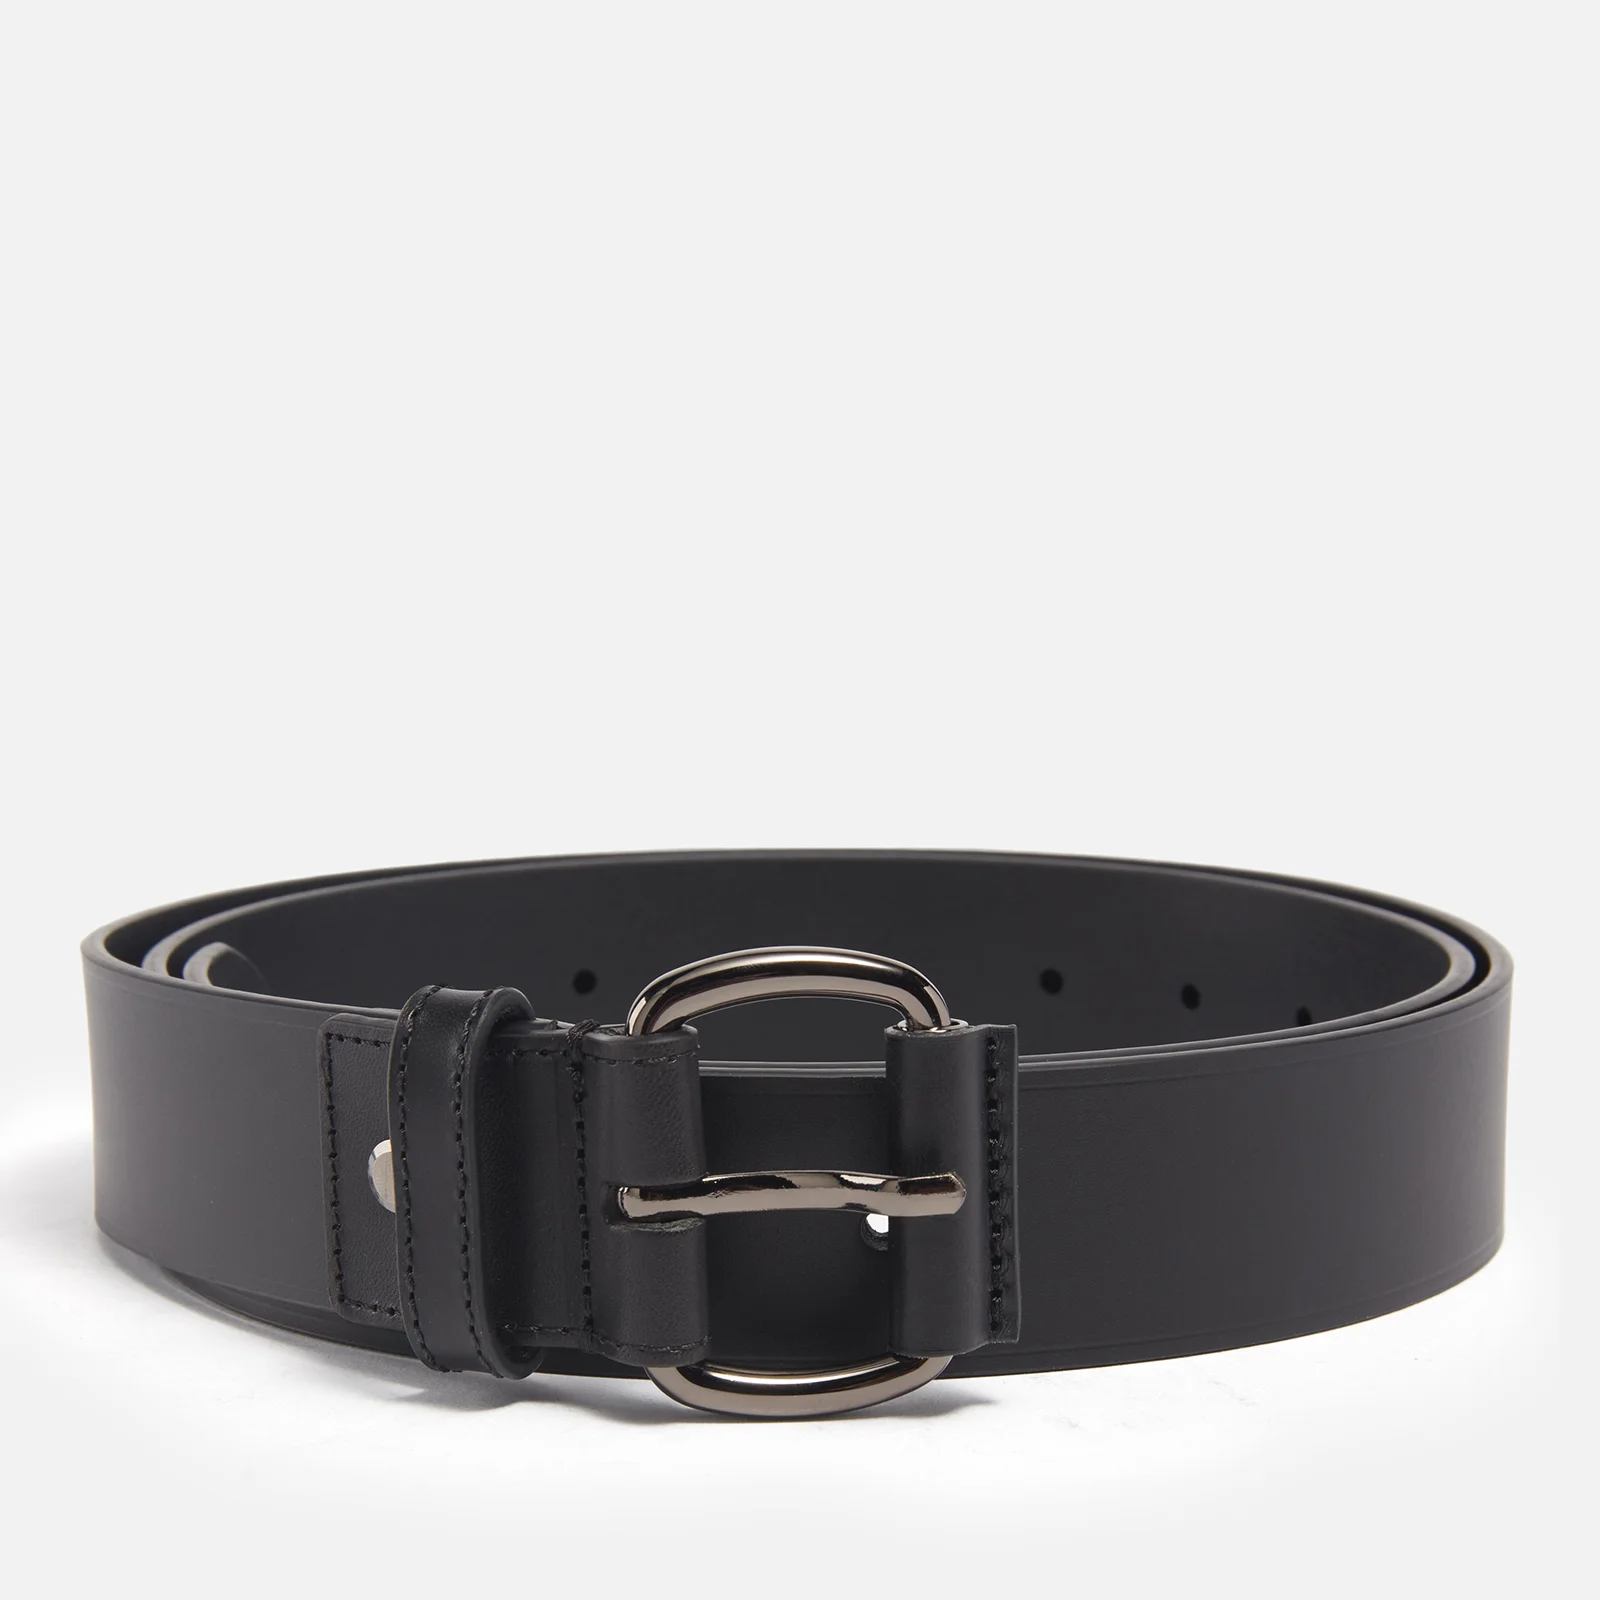 Vivienne Westwood Leather Belt Image 1